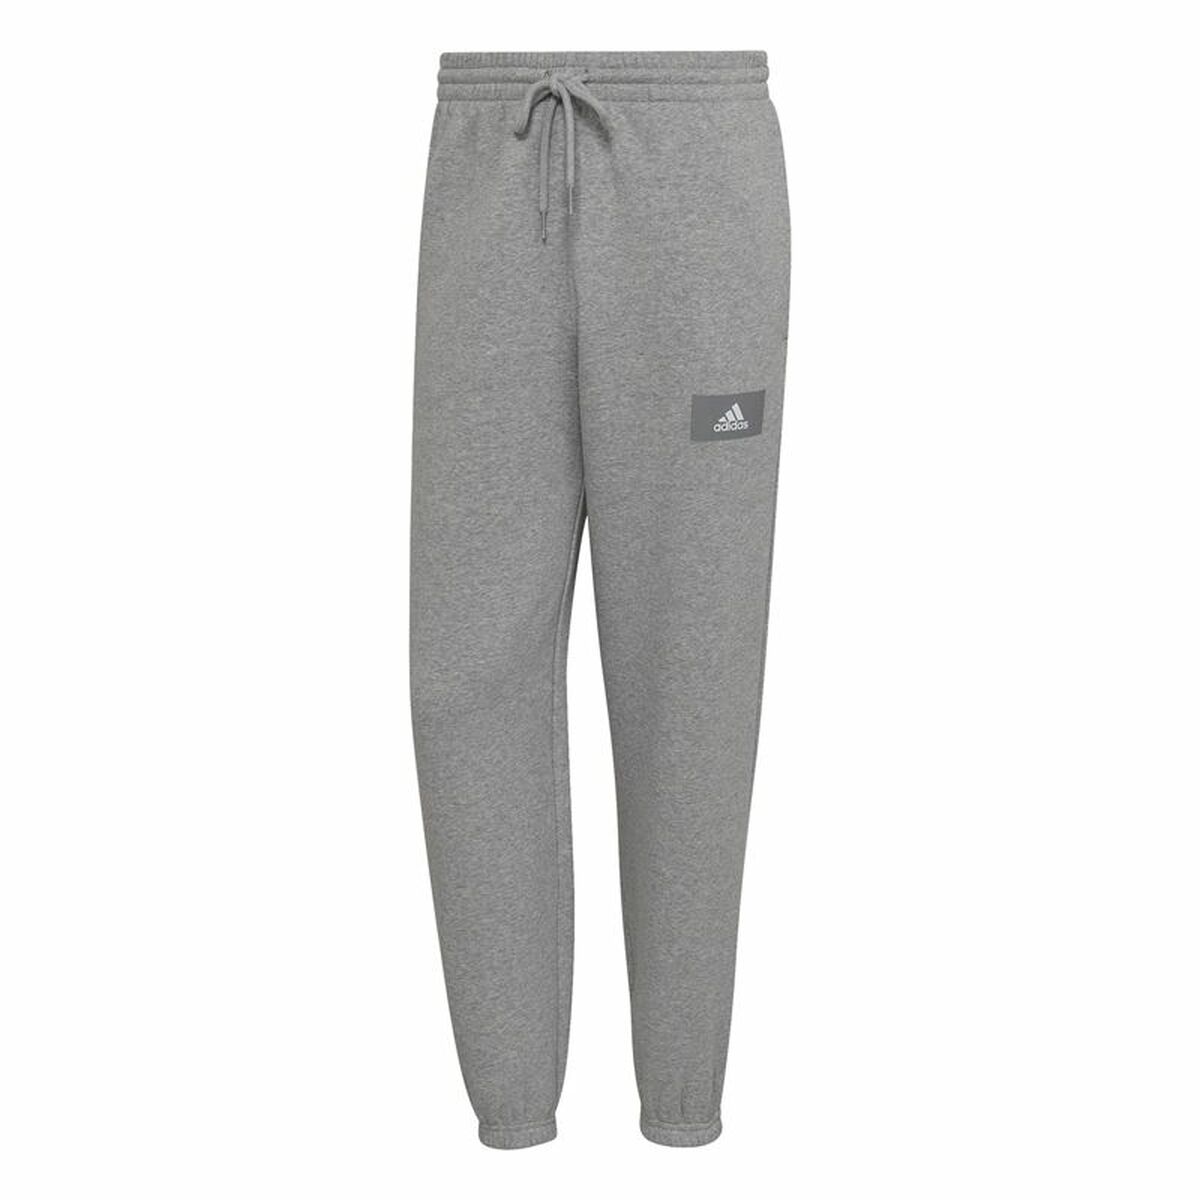 Pantaloni pentru Adulți Adidas Essentials FeelVivid Gri Bărbați - Mărime L